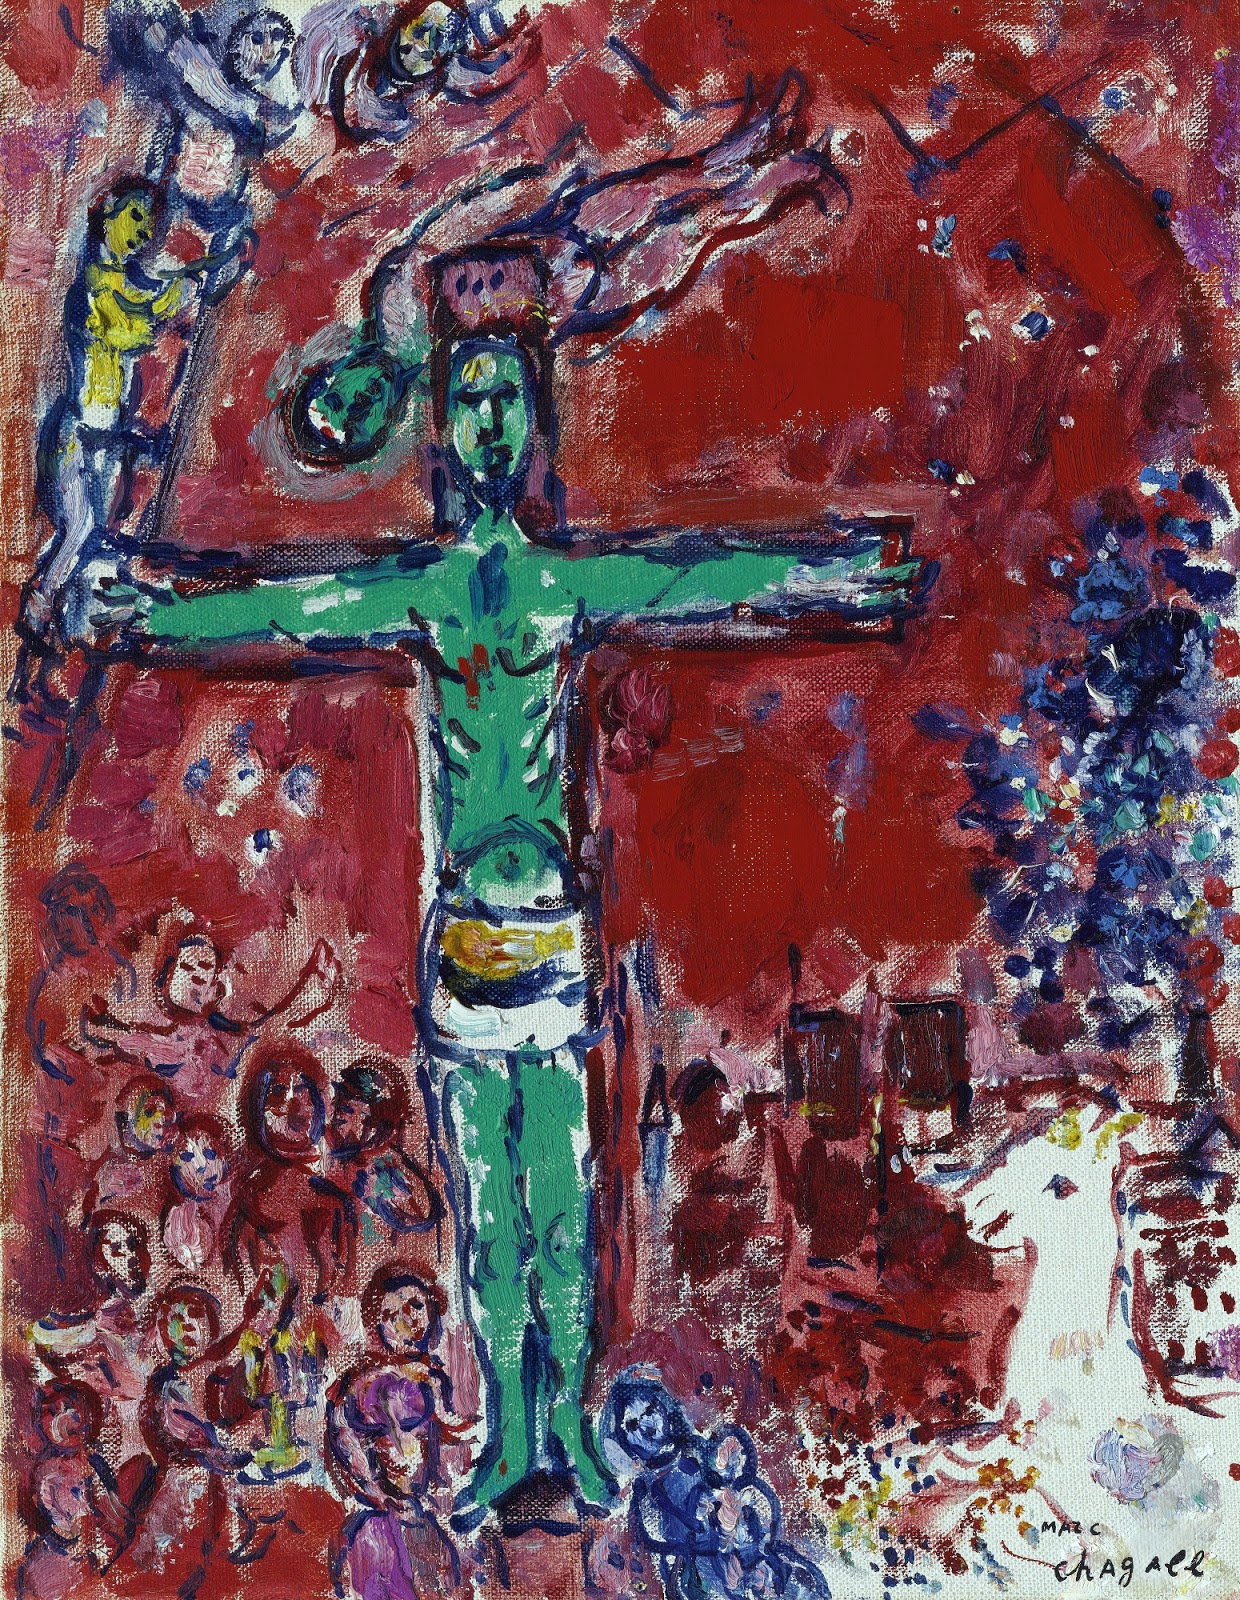 Marc+Chagall-1887-1985 (224).jpg